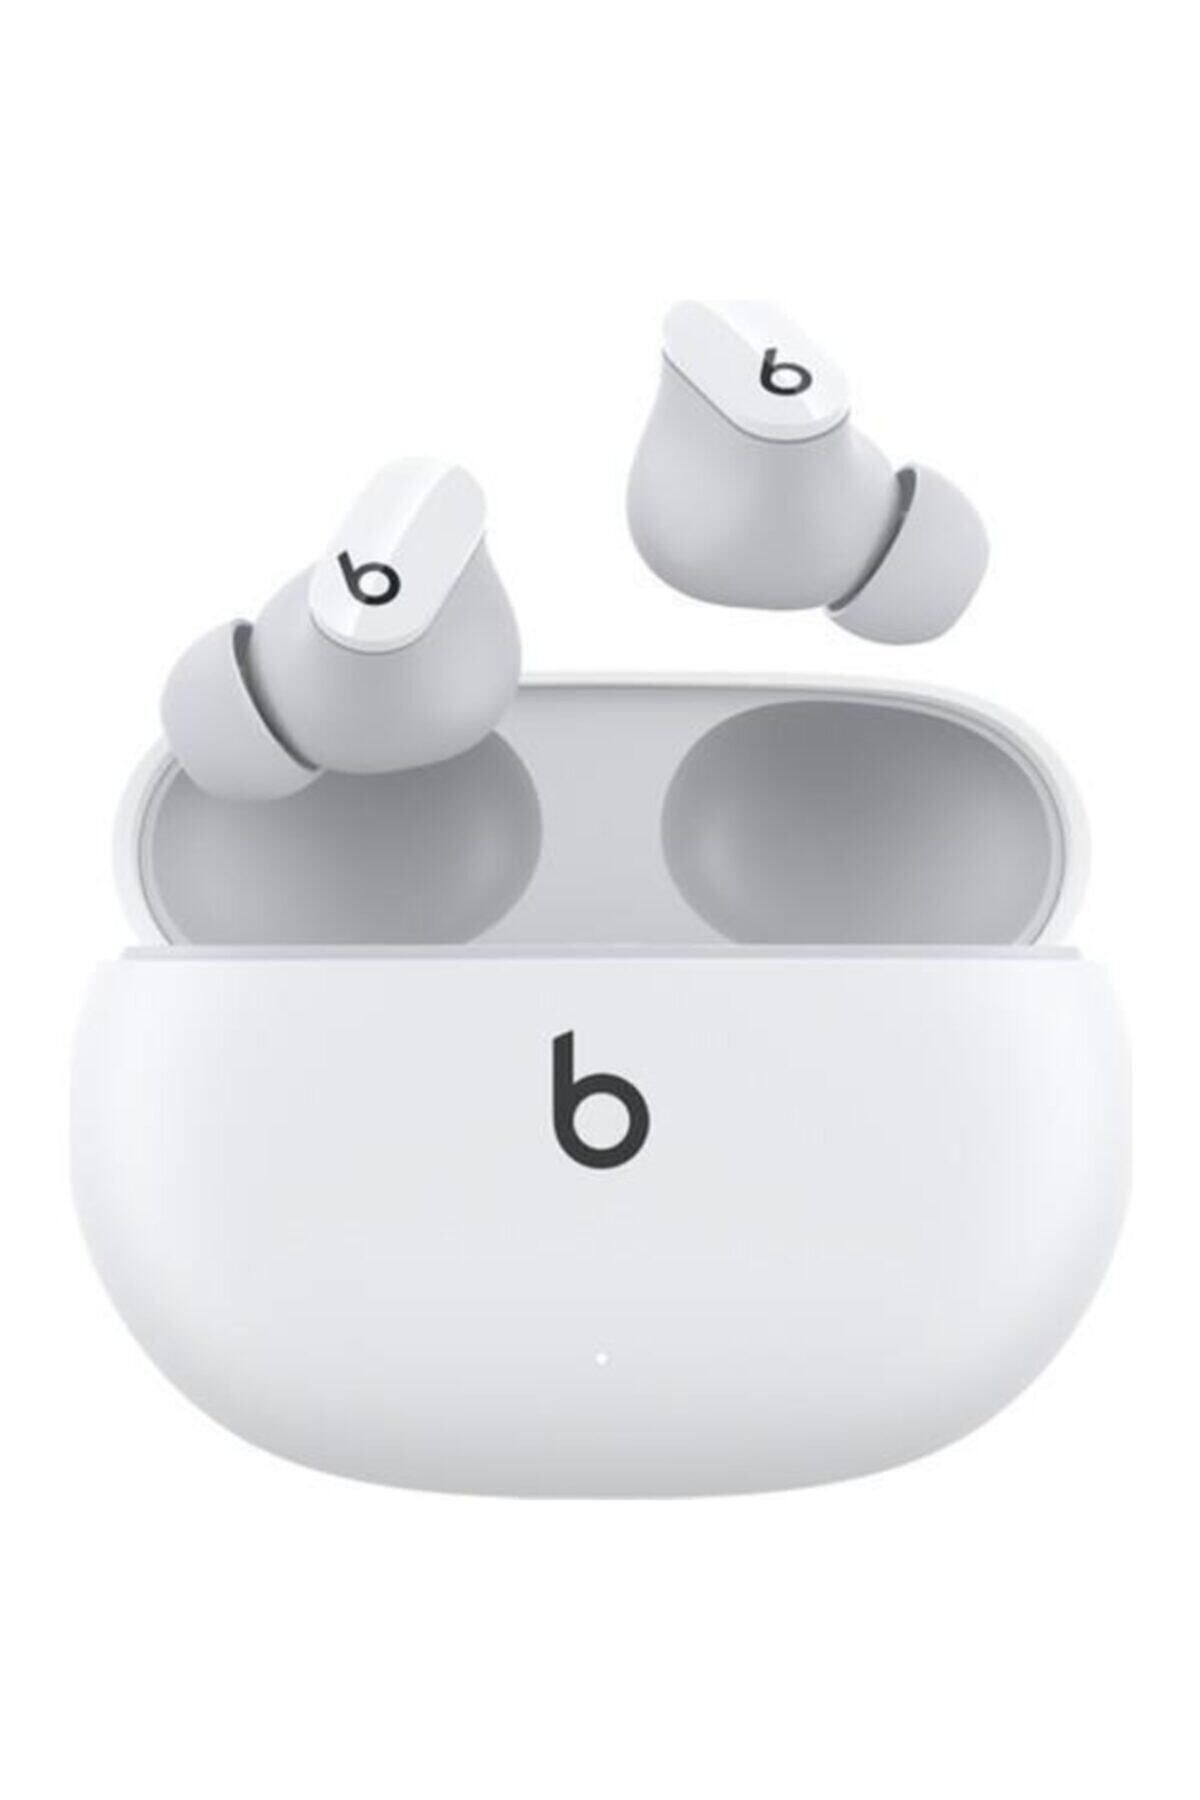 Beats Studio Buds Bluetooth Kulaklık Beyaz Mj4y3ee/a Resmi Distribütör Garantili